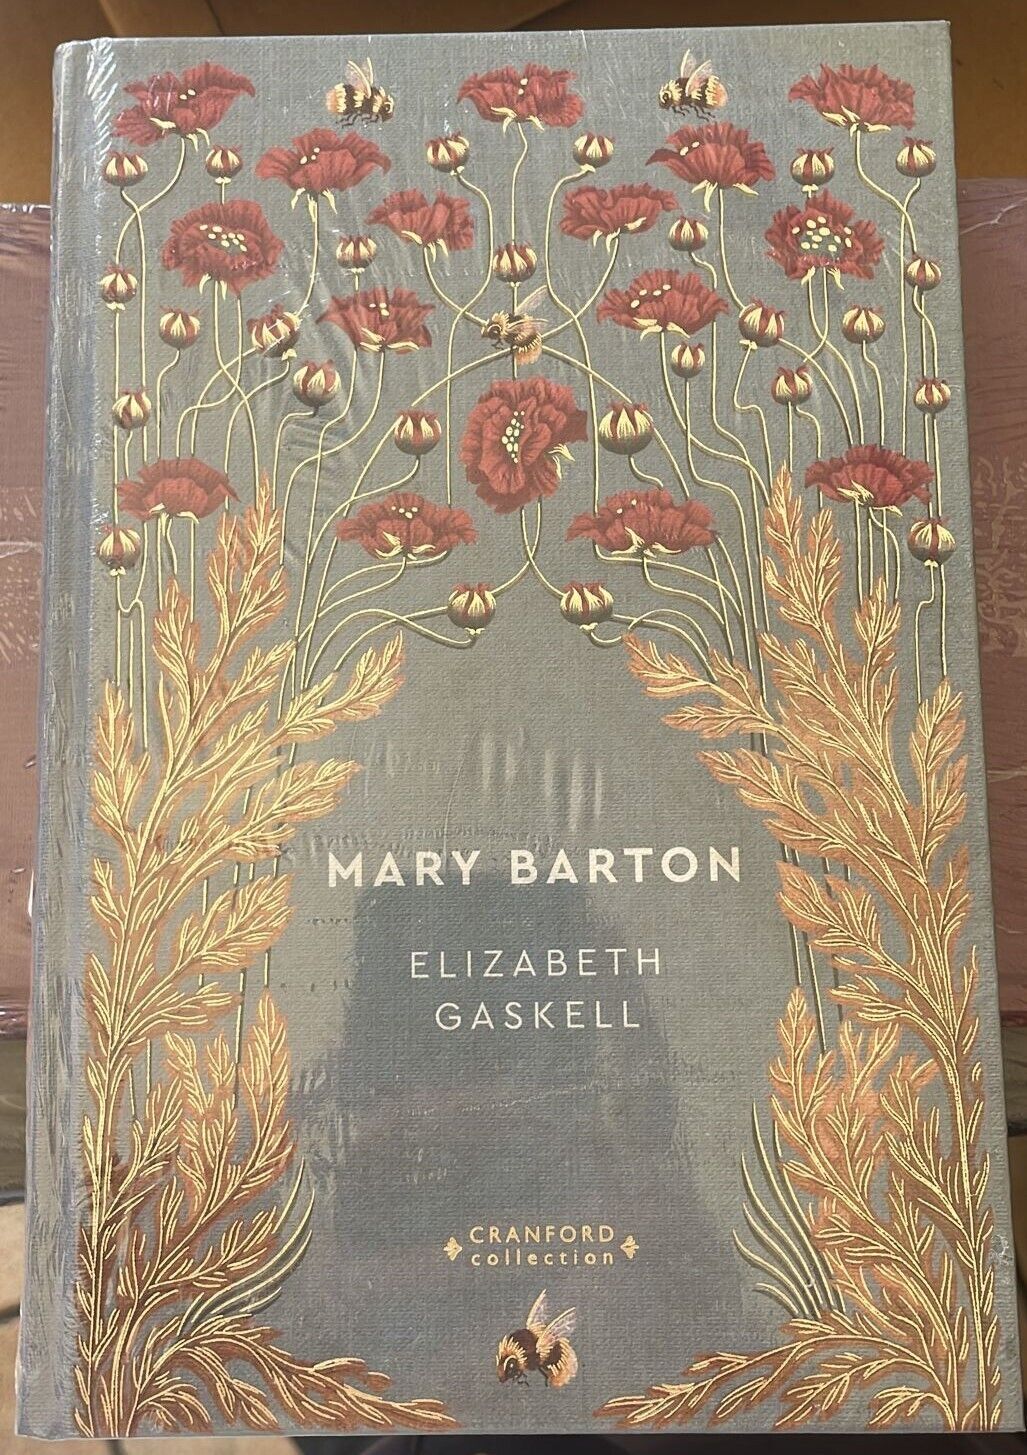 Storie senza tempo n. 54 - Mary Barton CRANFORD COLLECTION …